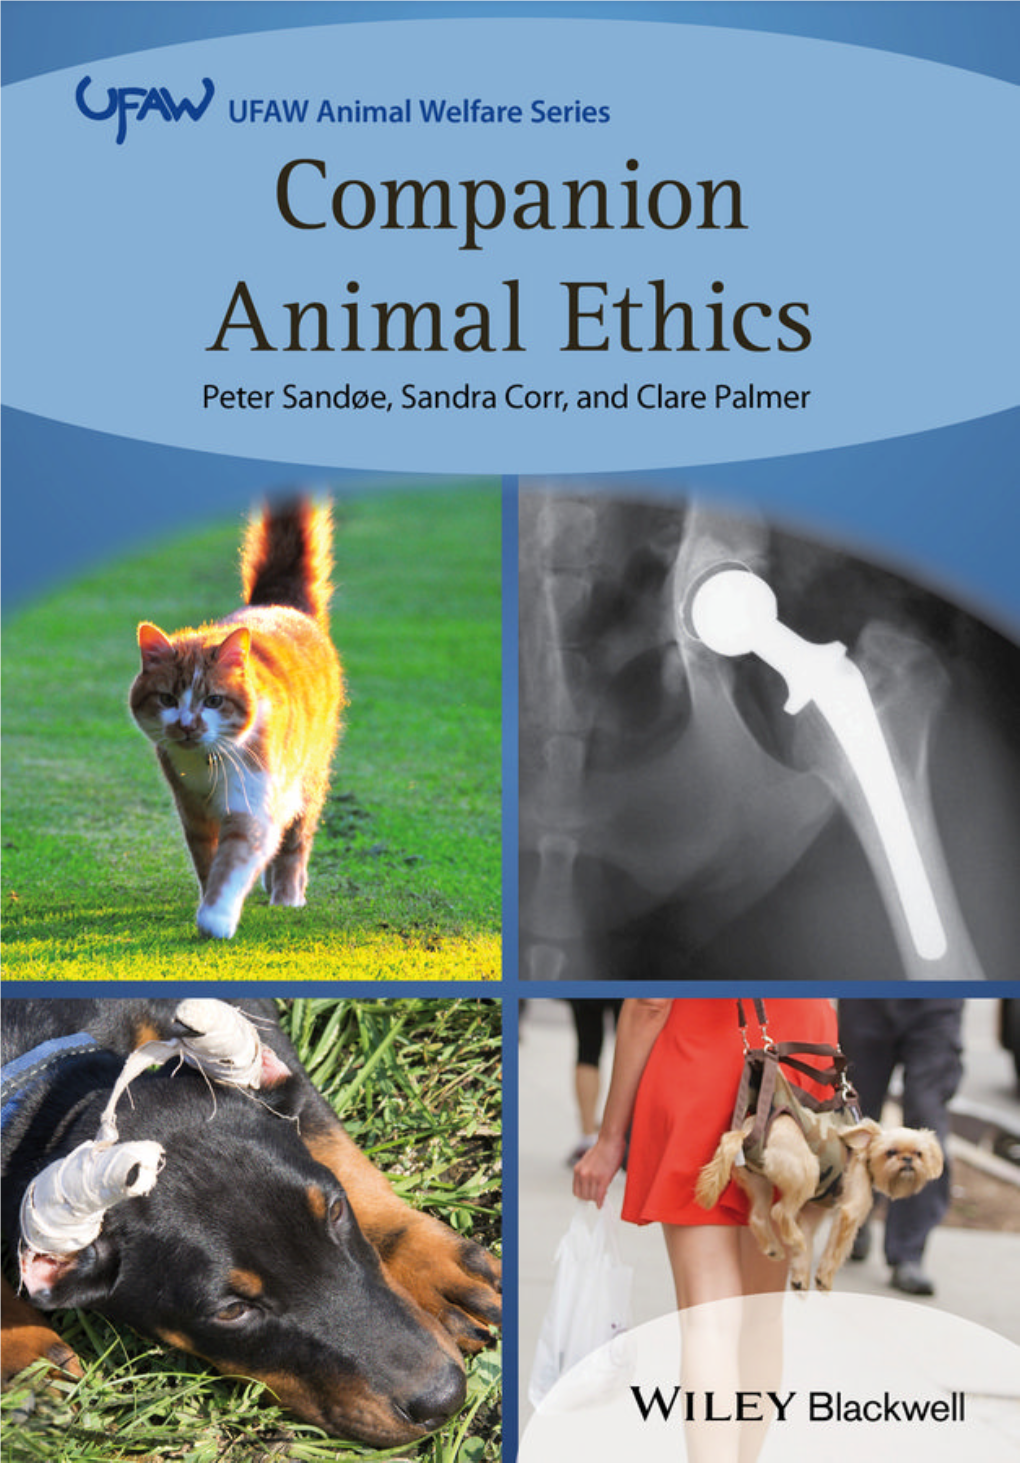 Companion Animal Ethics Sandoe Ffirs.Tex V3 - 07/24/2015 7:04 P.M